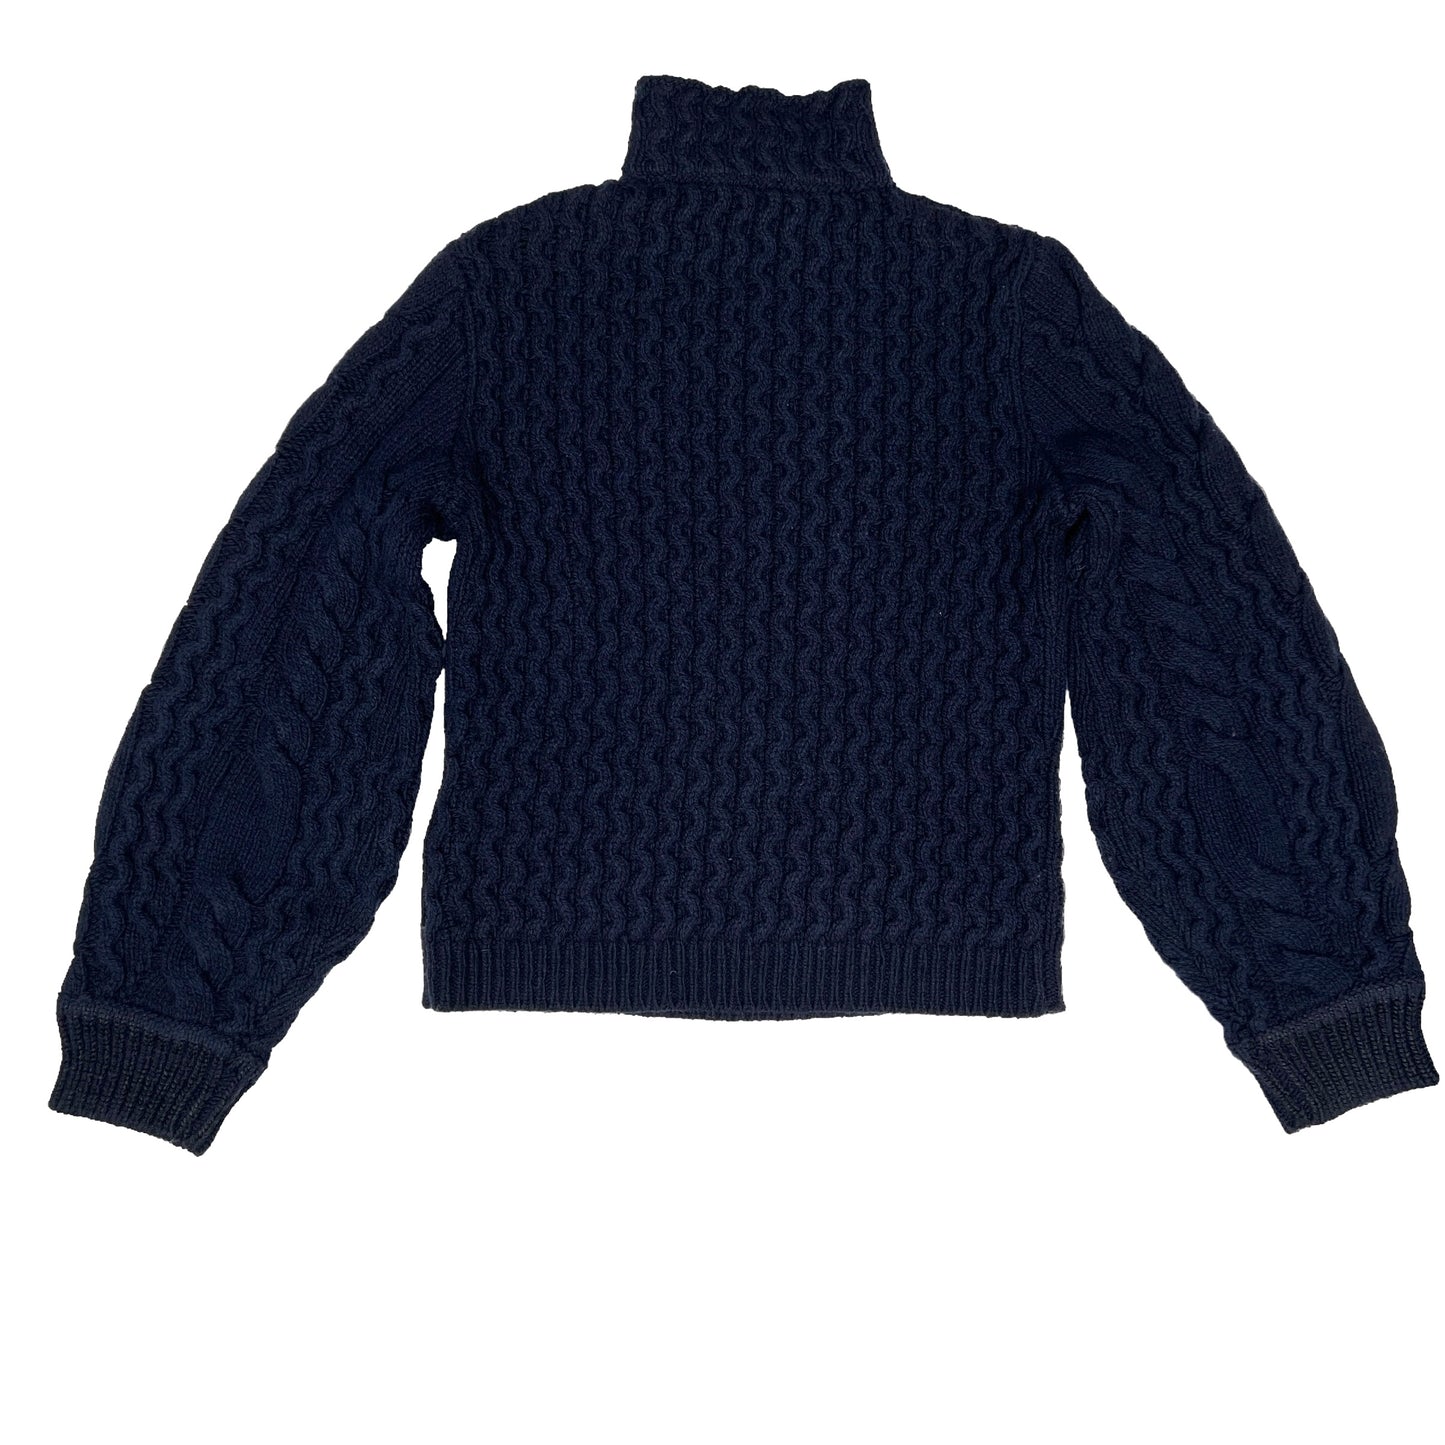 Oversized Navy Sweater - XS